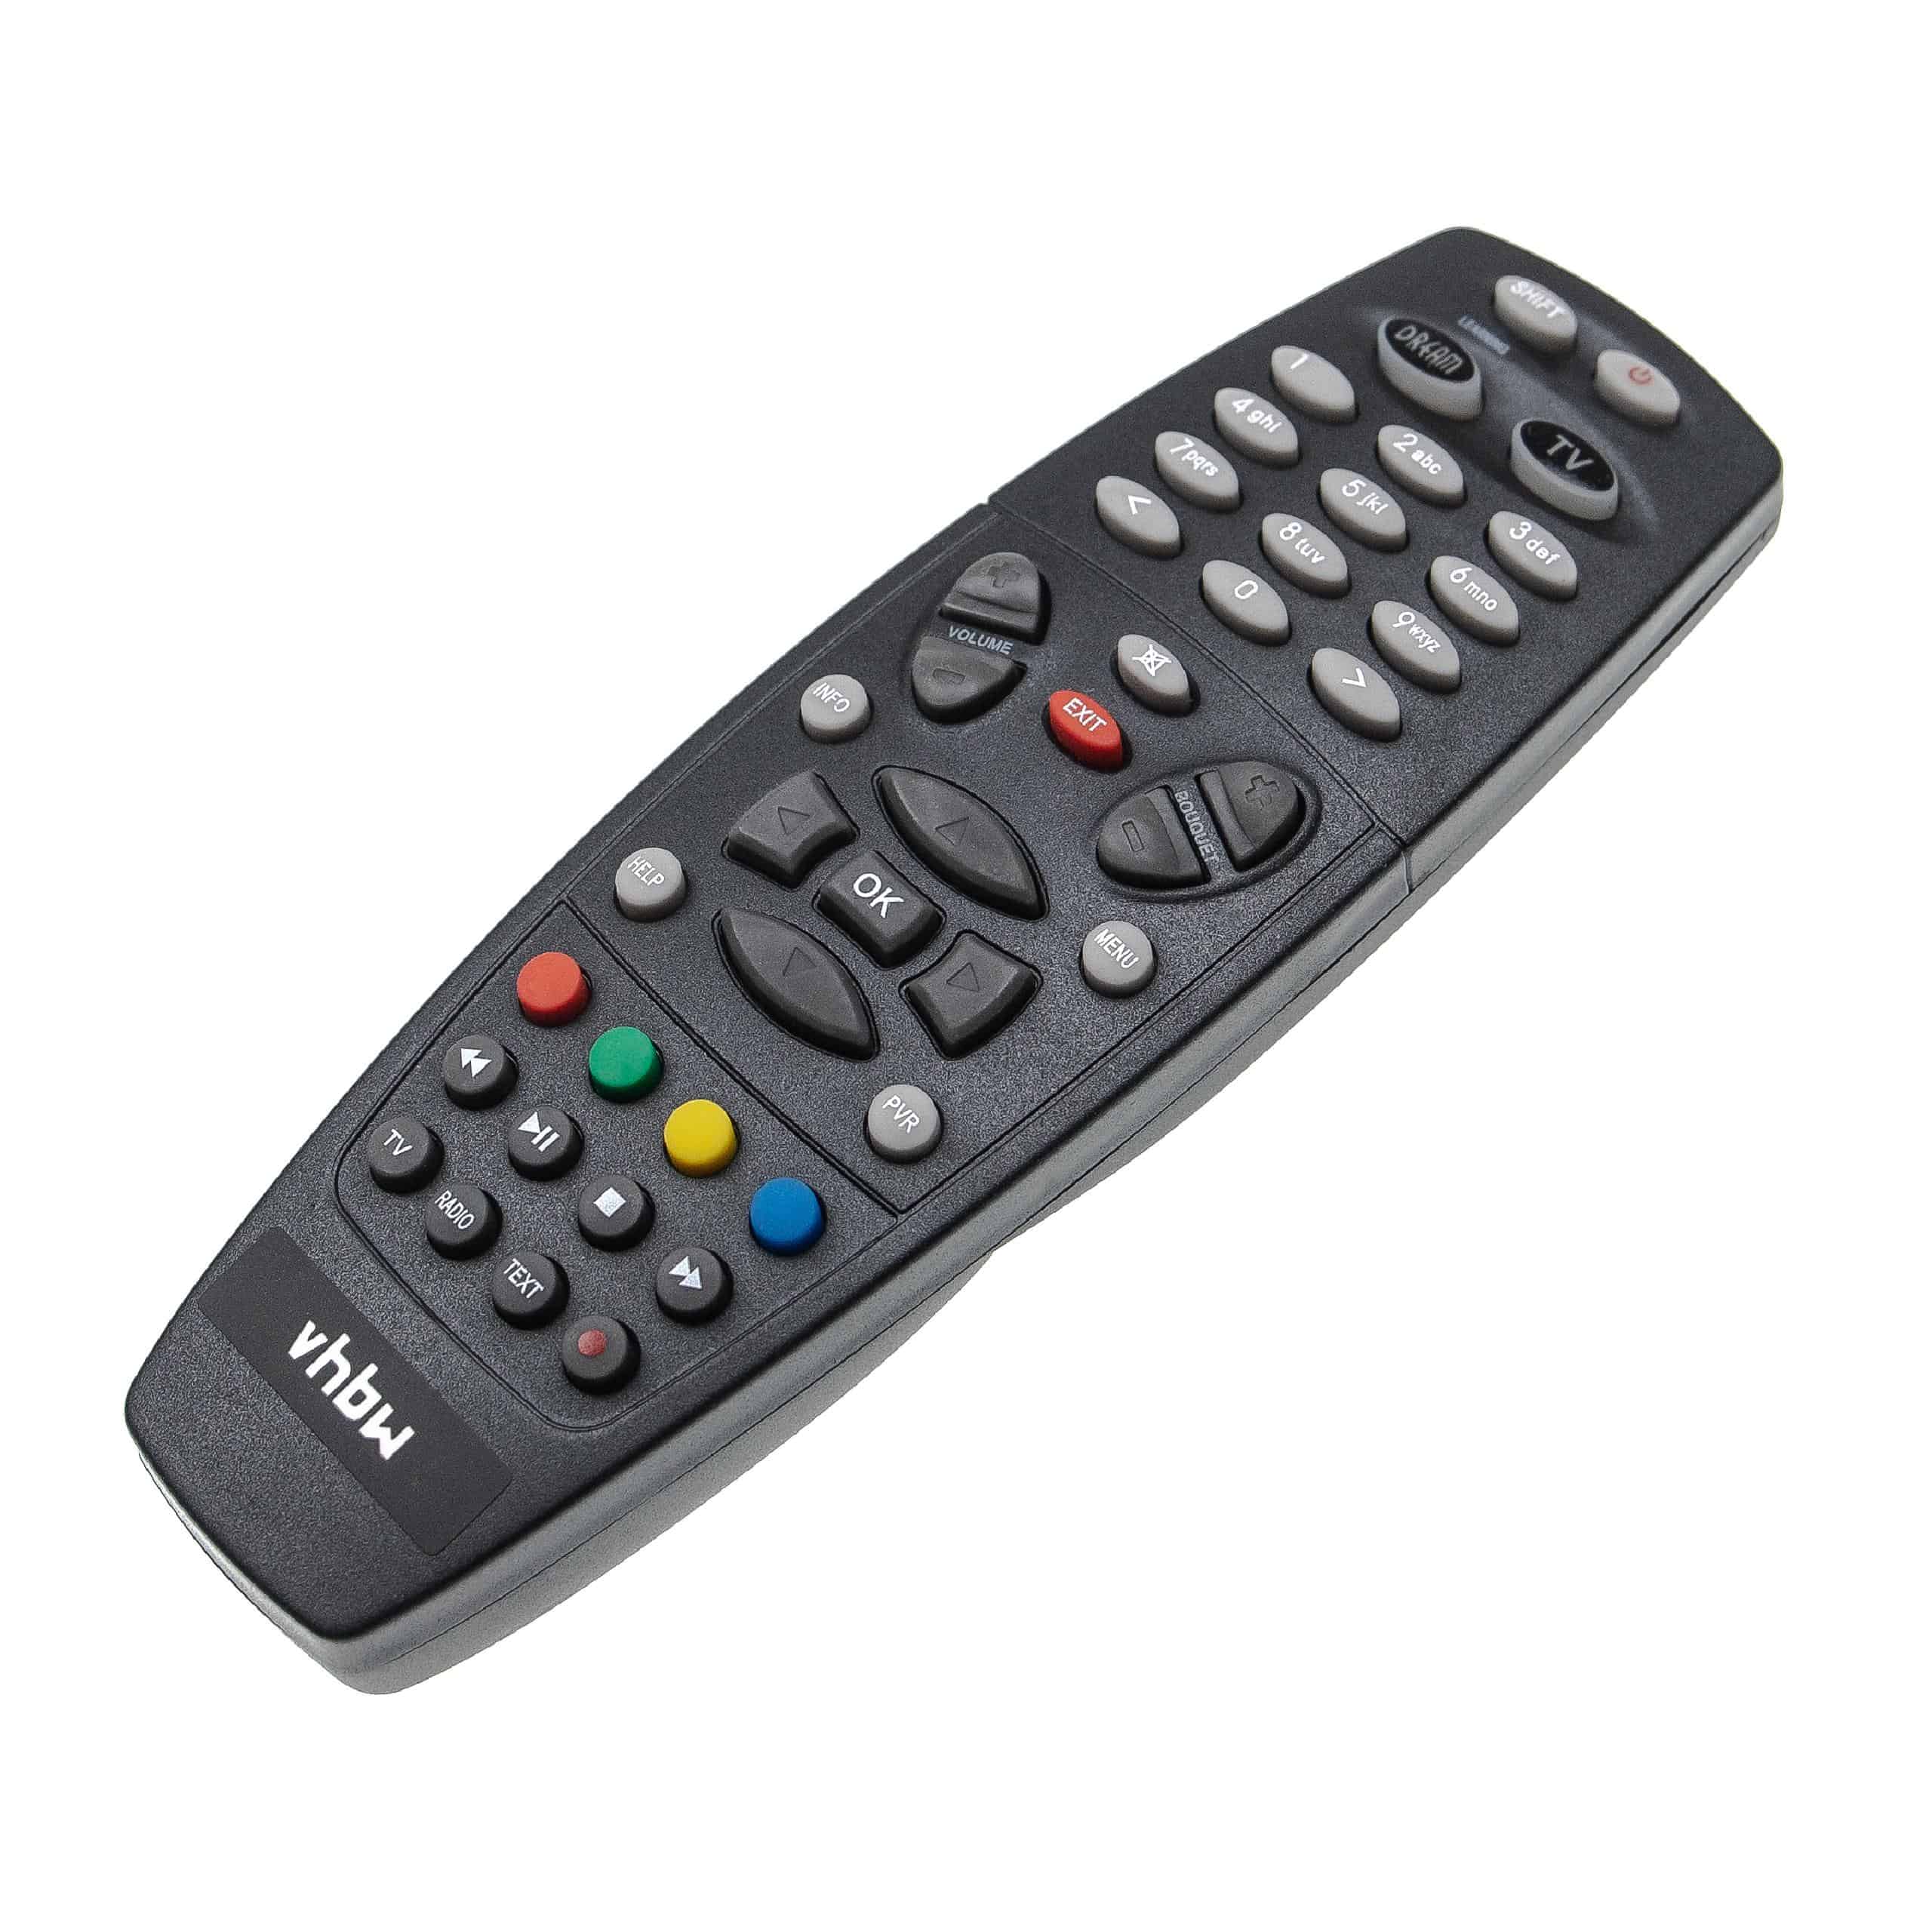 Remote Control replaces Dreambox RC-10 for Dreambox Streaming Box, Internet-TV Box